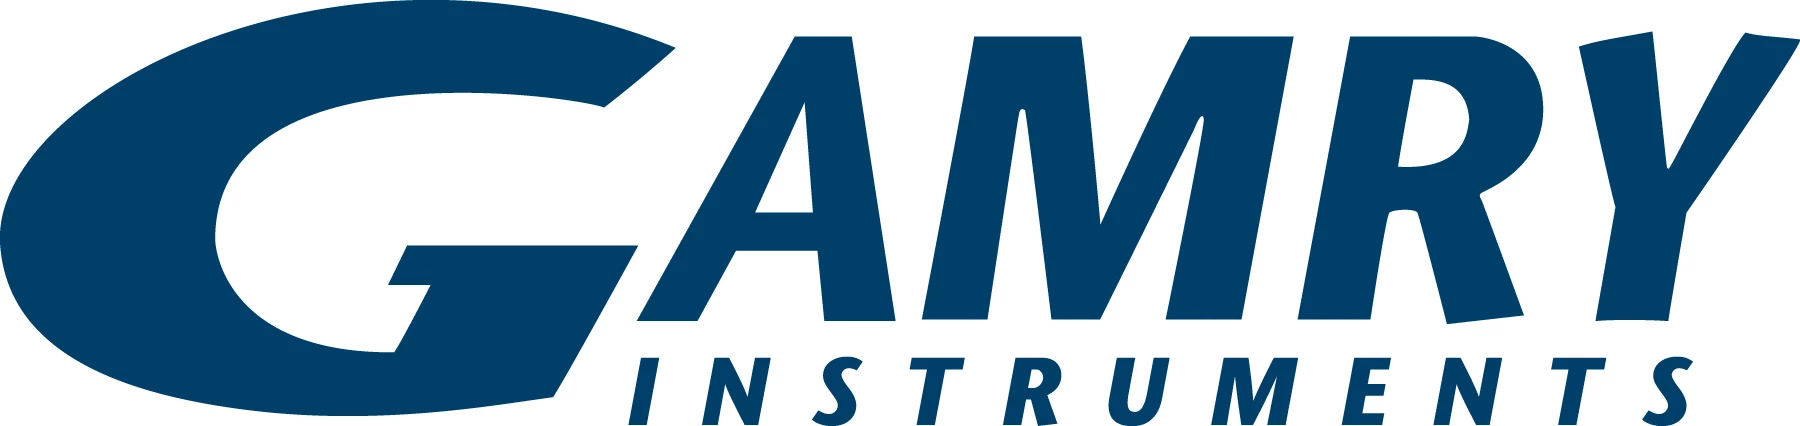 Gamry Instruments logo